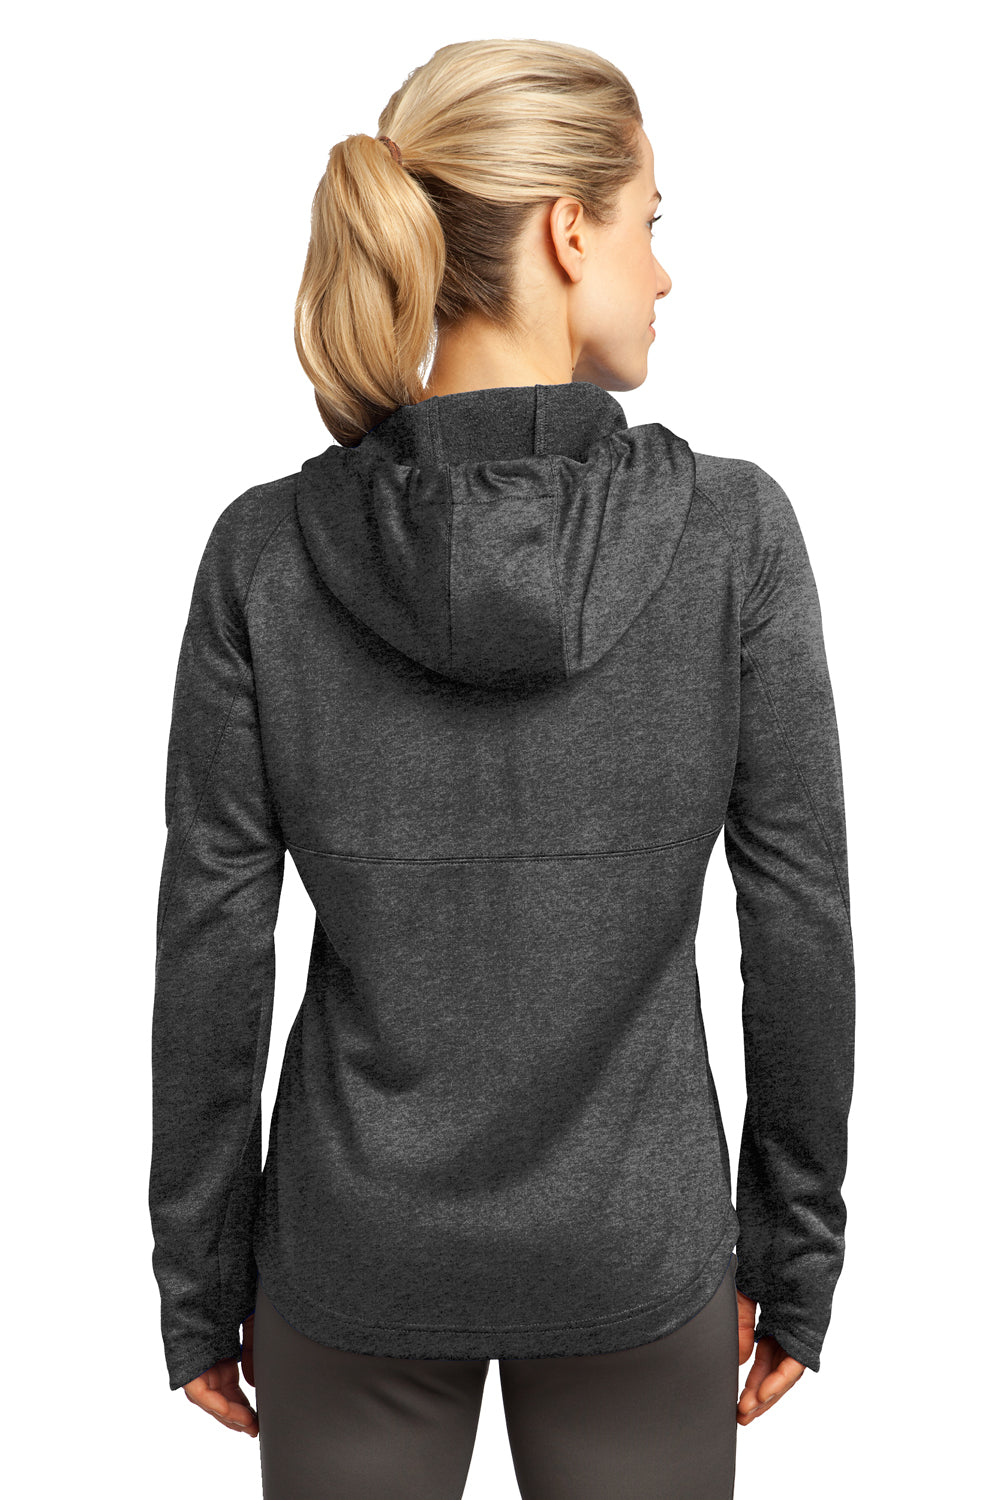 Sport-Tek L248 Womens Tech Moisture Wicking Fleece Full Zip Hooded Sweatshirt Hoodie Heather Graphite Grey Back